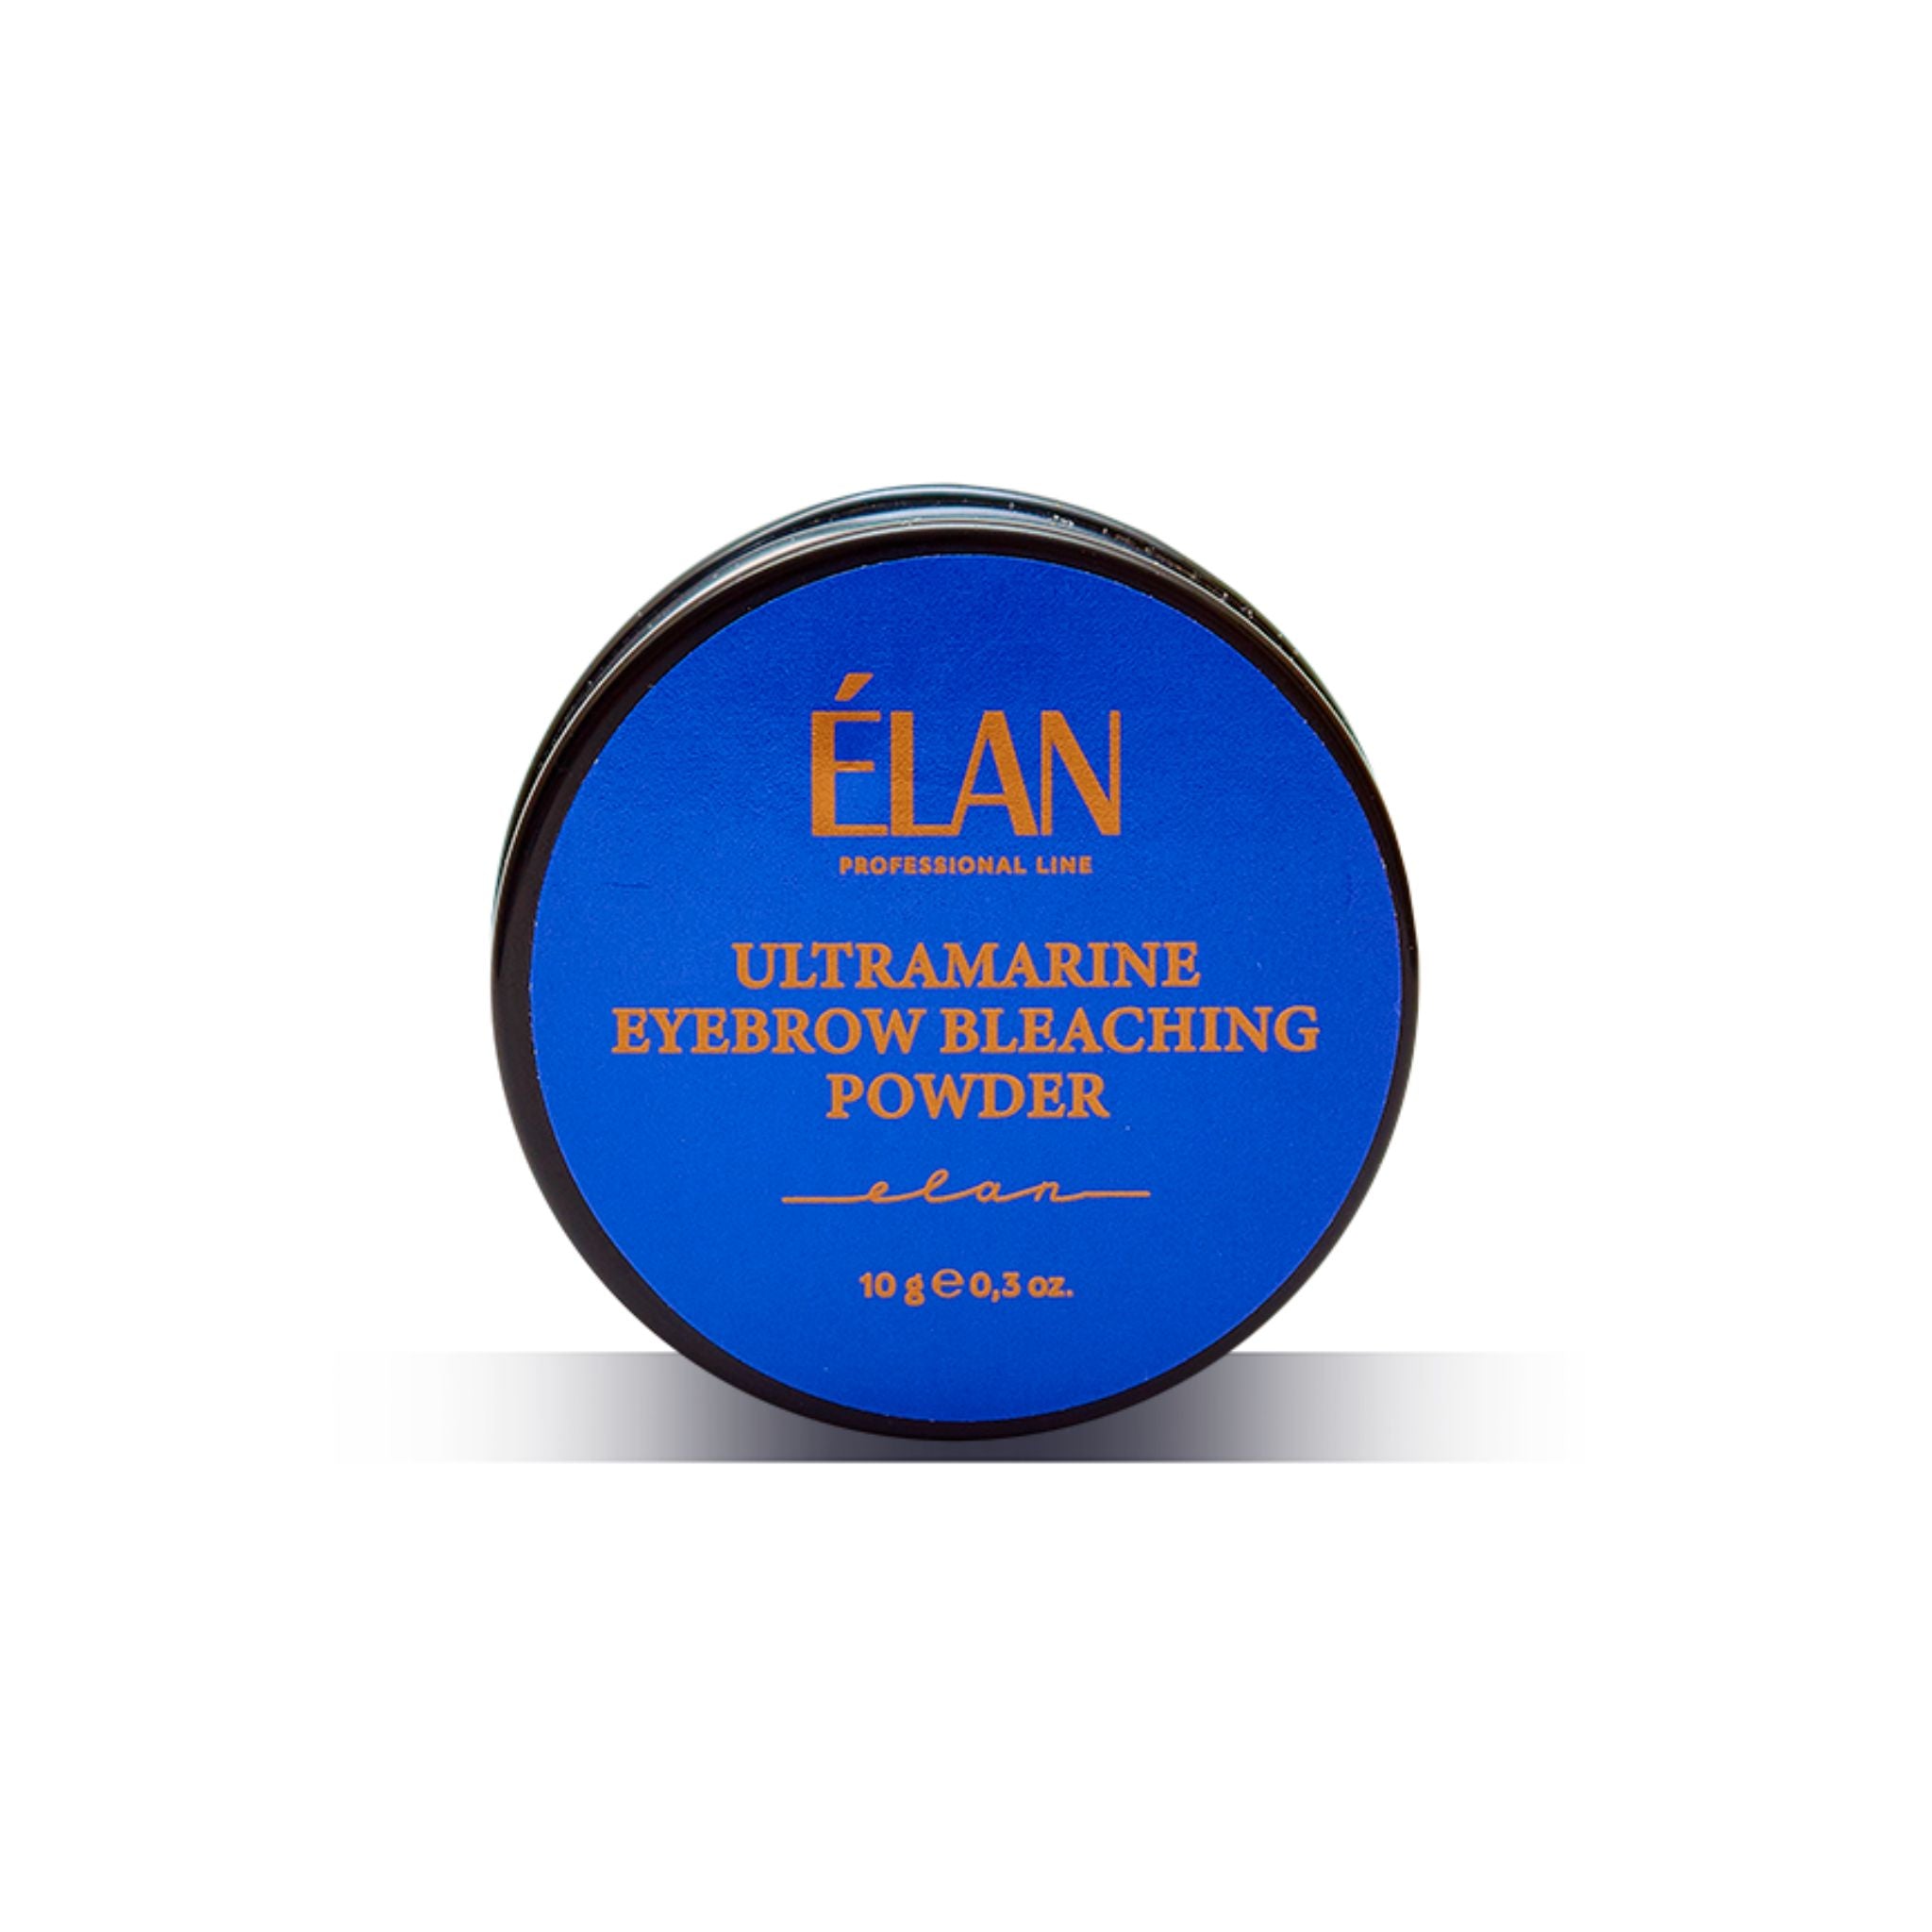 ELAN Ultramarine Eyebrow Bleaching Powder